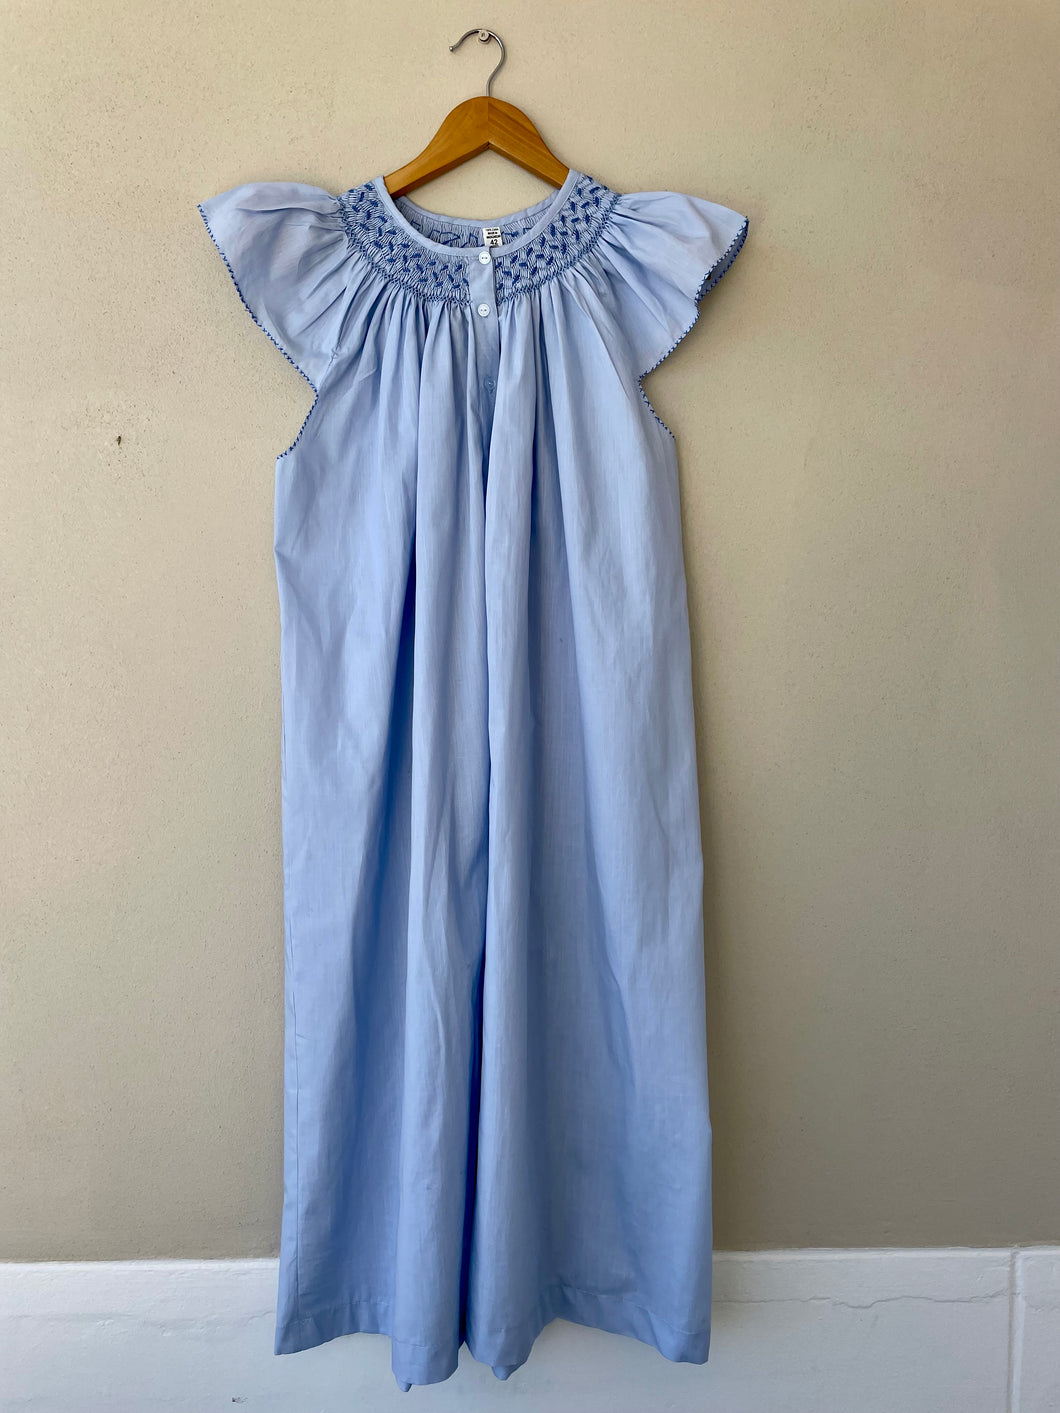 Adult classic blue market dress